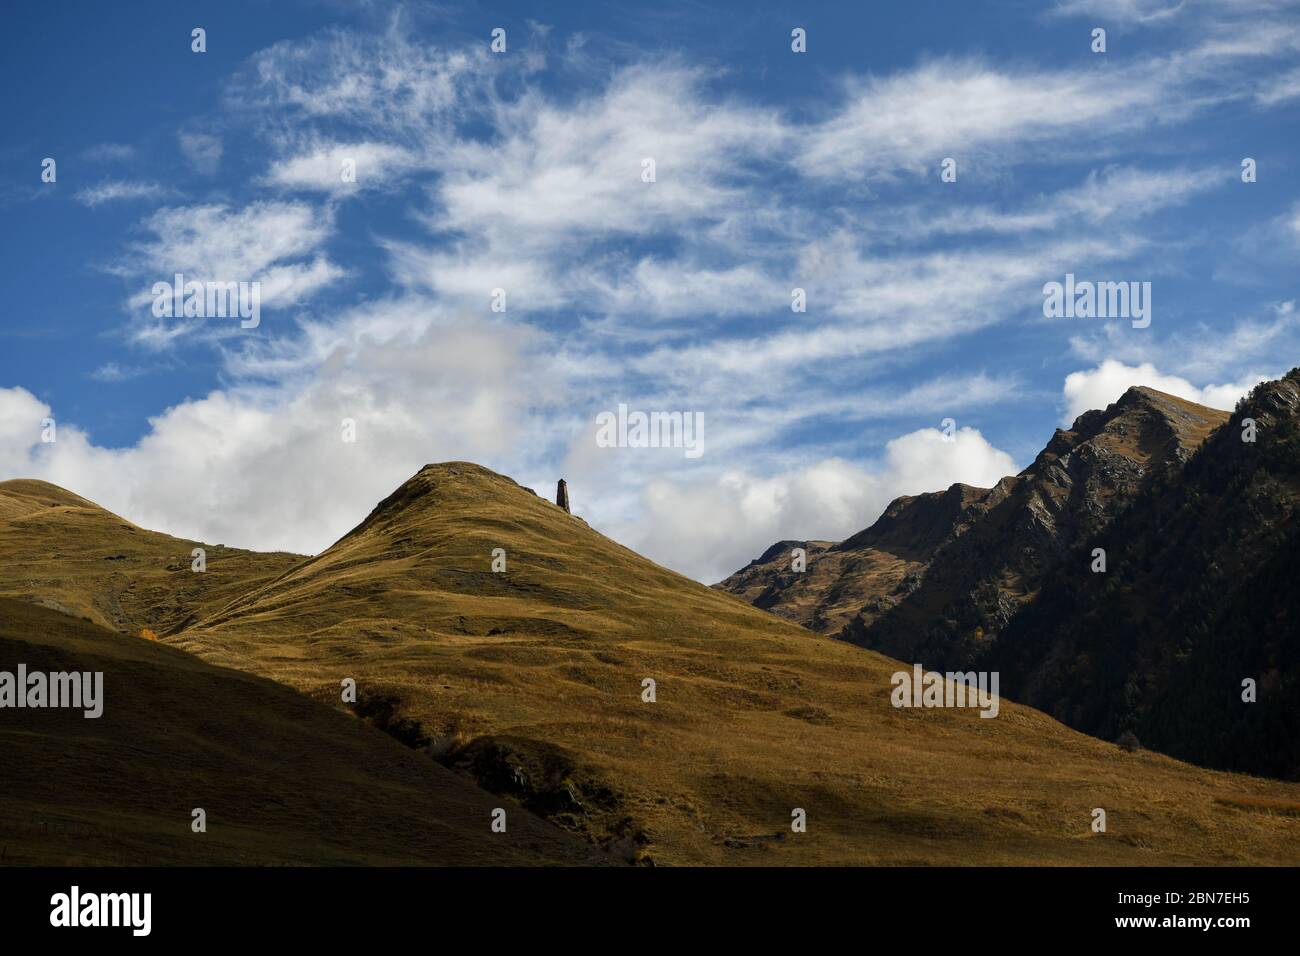 Caucasus, Georgia, Tusheti region, Dartlo. Medieval tower against a mountain landscape in Tusheti region Stock Photo